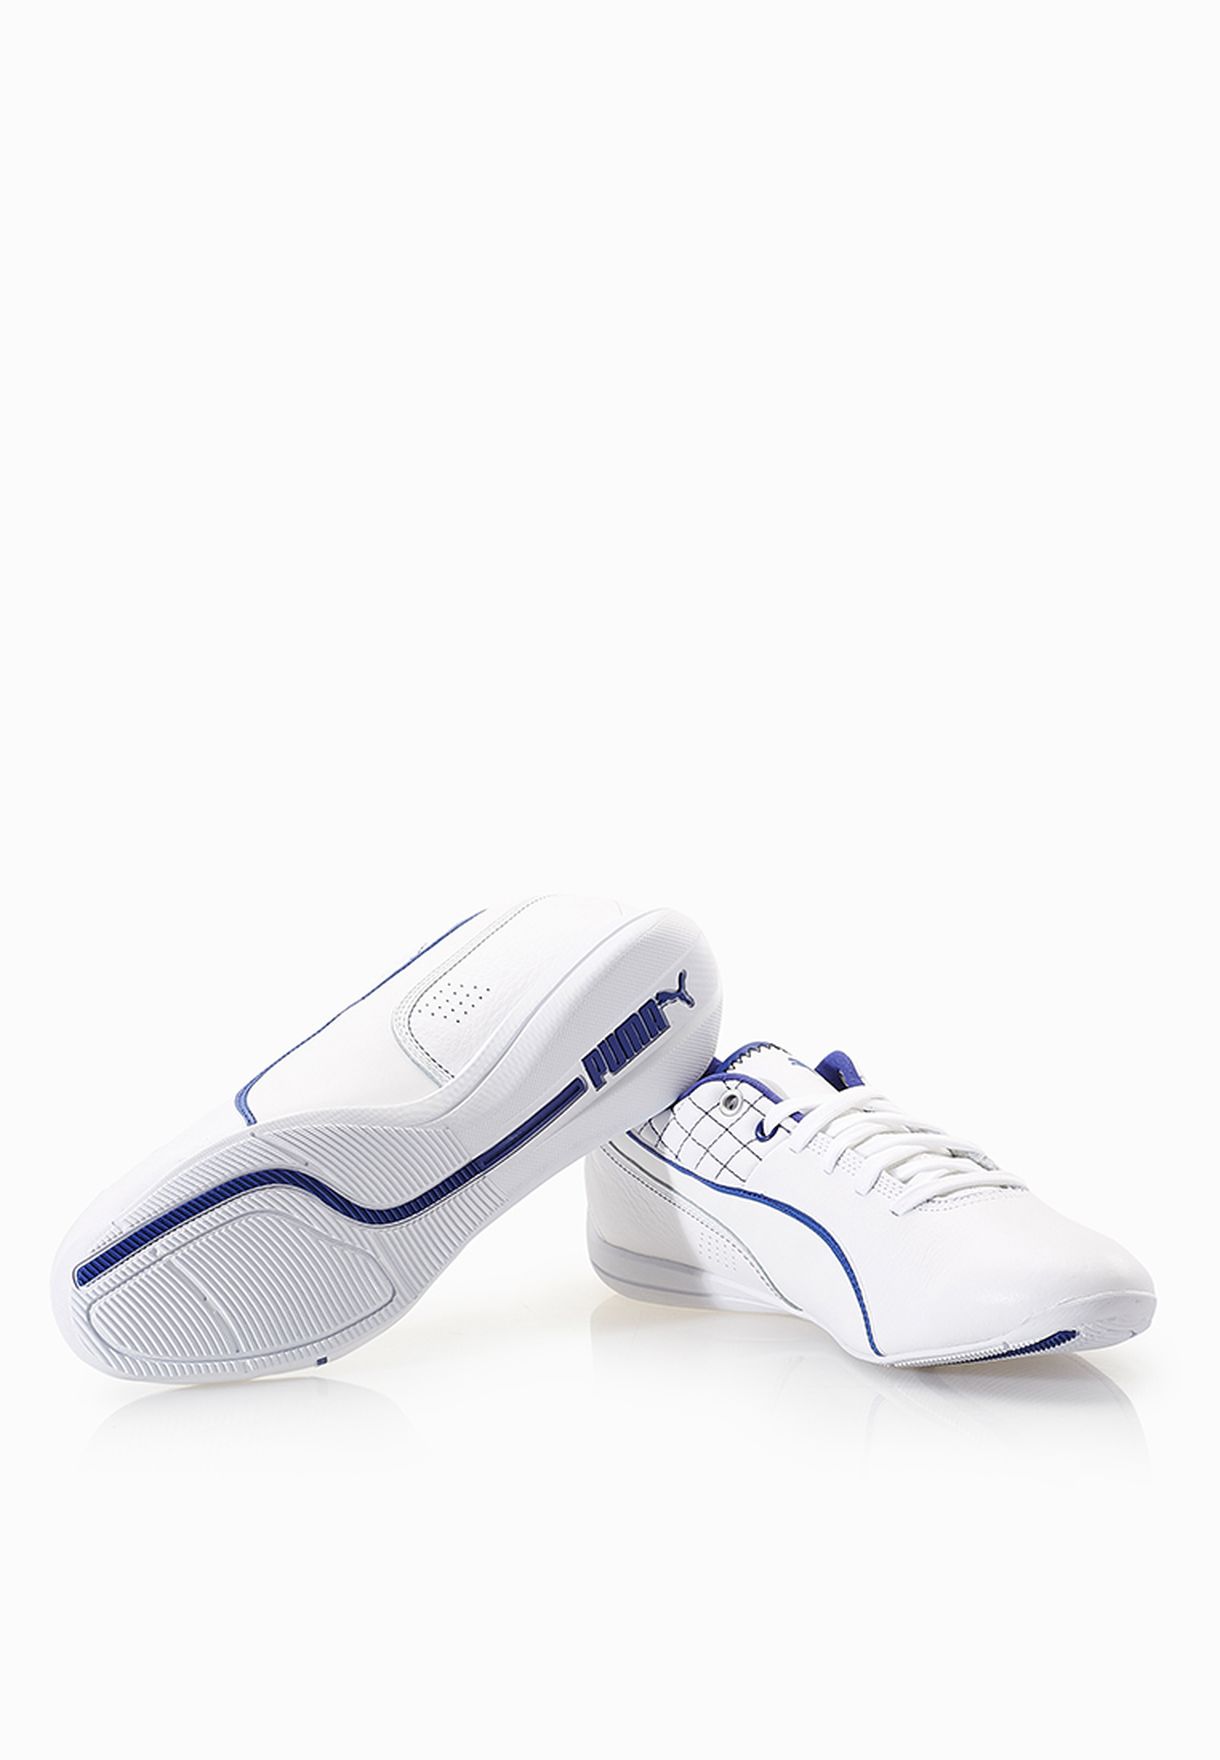 puma mamgp drift cat 6 white sport shoes